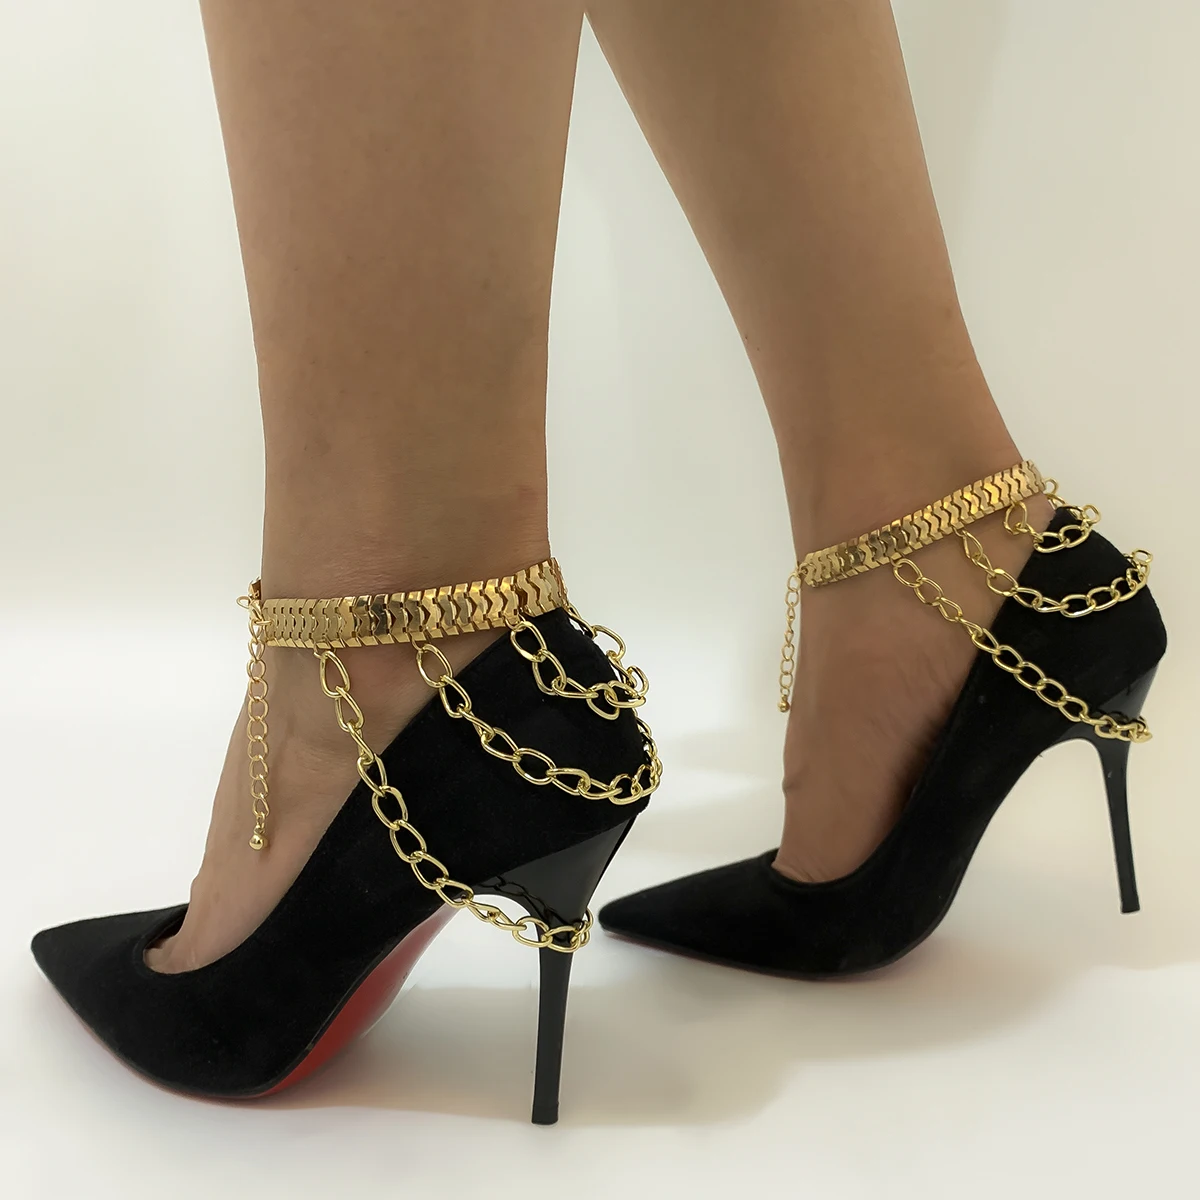 Ingemark 1PC Multilayer High Heel Shoe Tassel Chain Foot Ankle Bracelet for Women Crystal Pearl Beach Barefoot Sandals JewelryPr